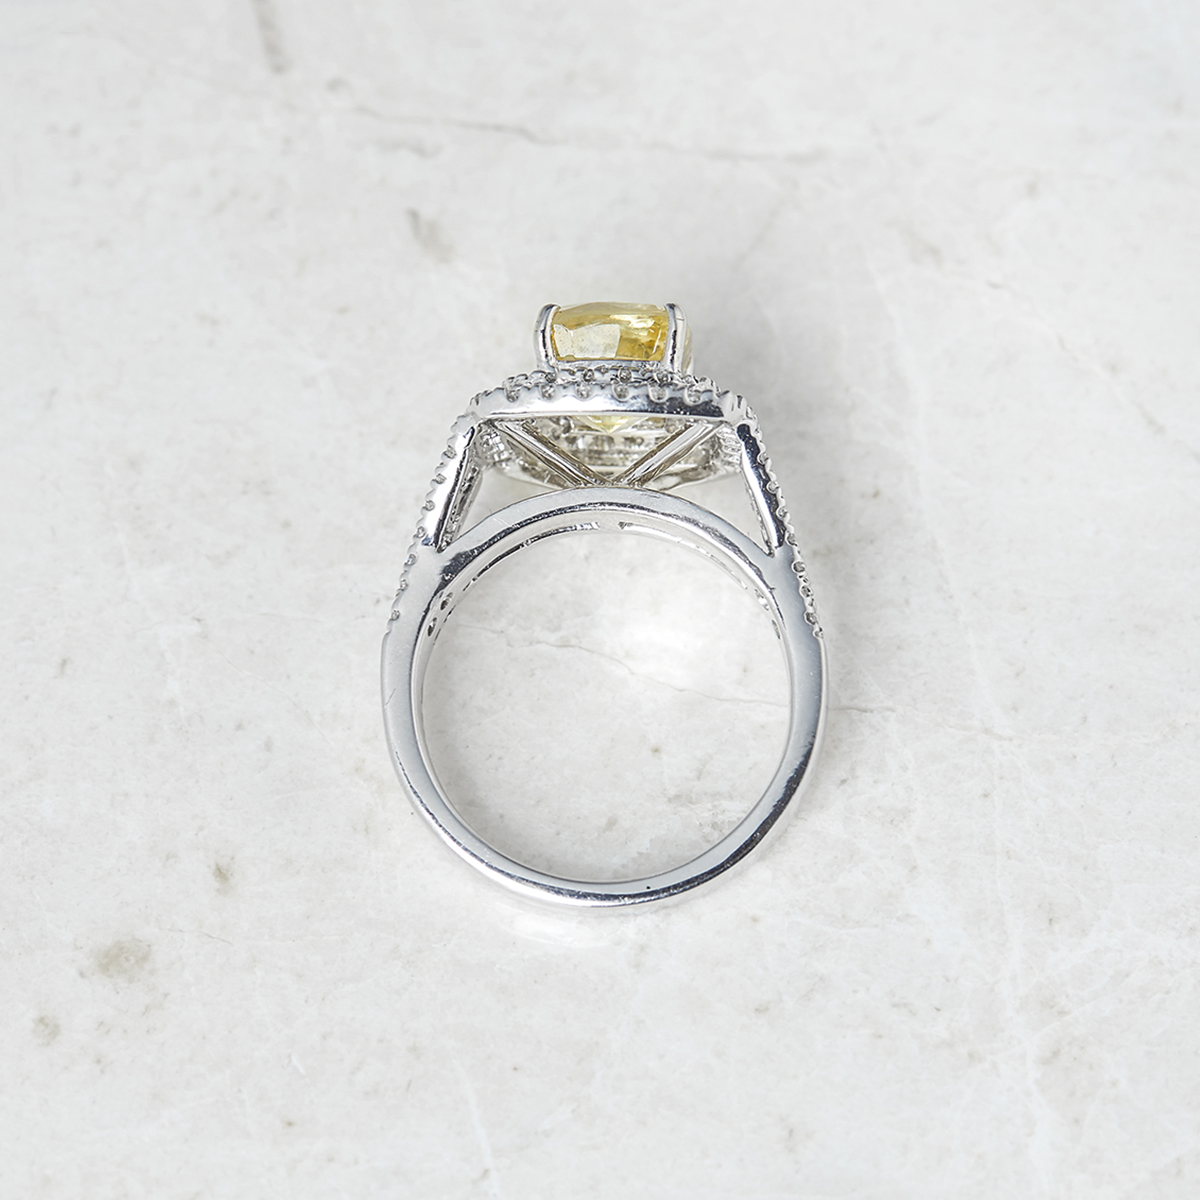 Unbranded, Platinum Cushion Cut 3.56ct Yellow Sapphire & 0.85ct Diamond Ring - Image 4 of 5